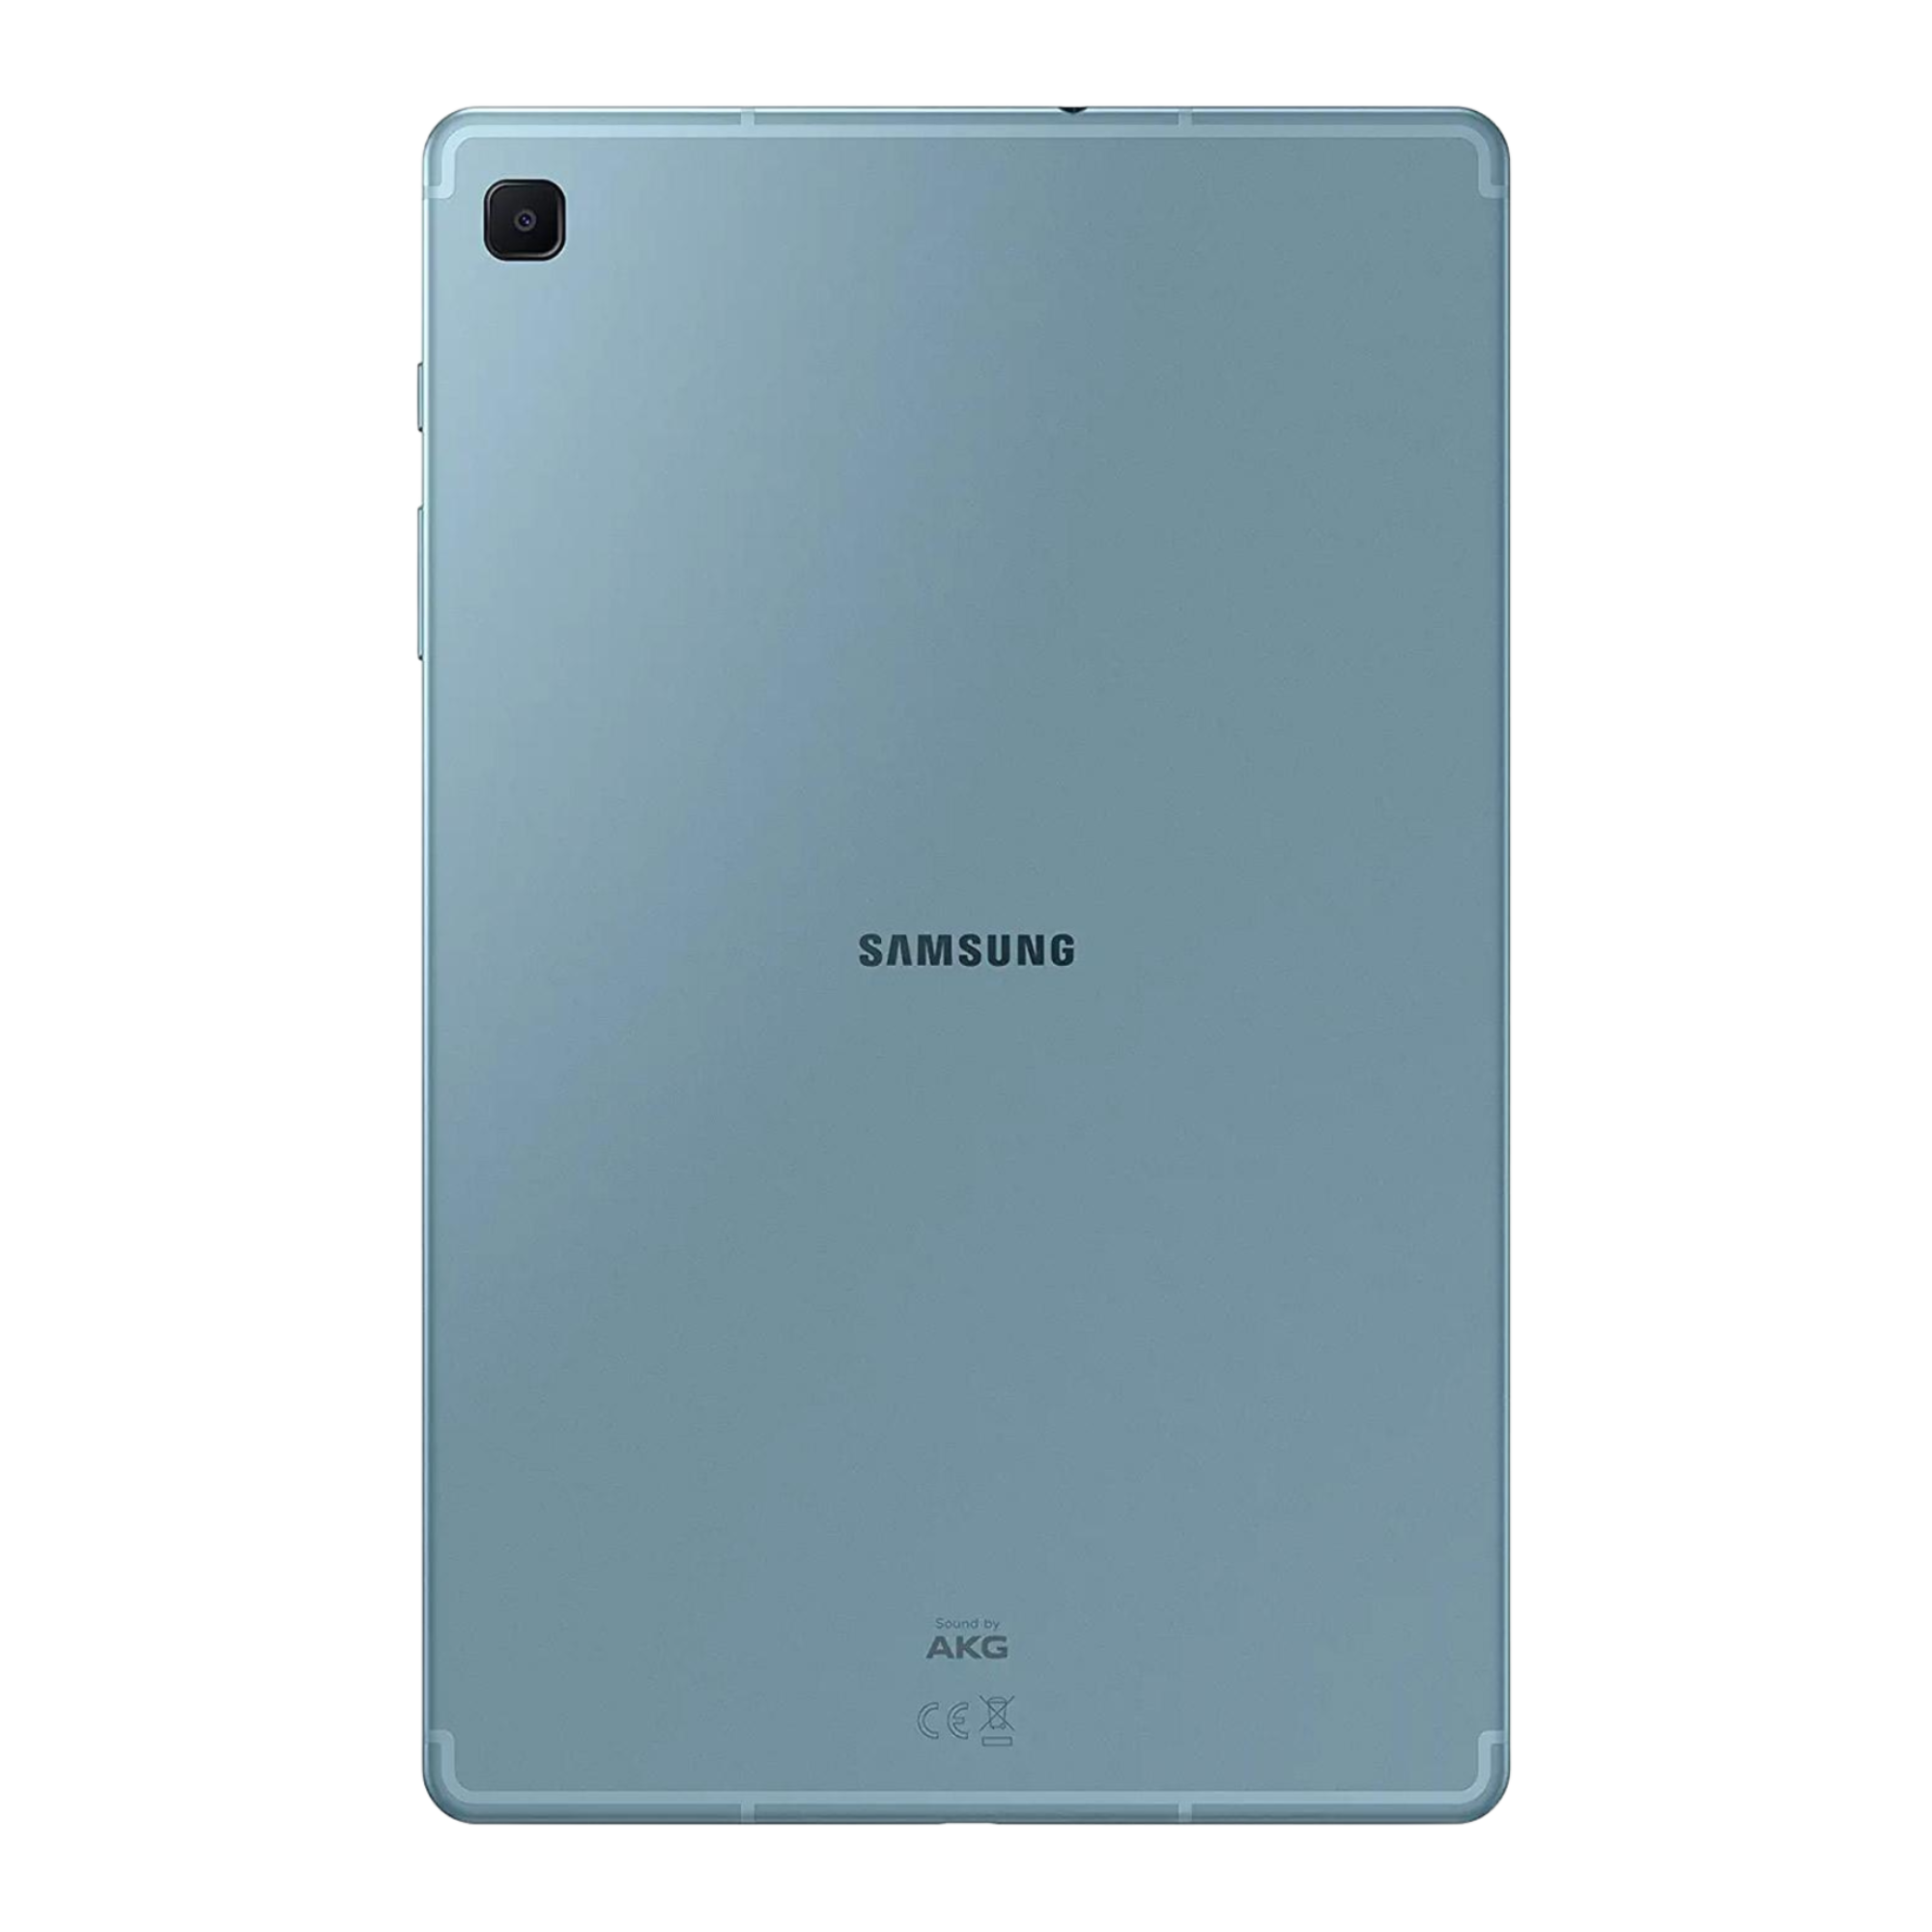 Samsung Galaxy Tab S6 Lite LTE 4GB RAM, 64GB - Grey - TVs